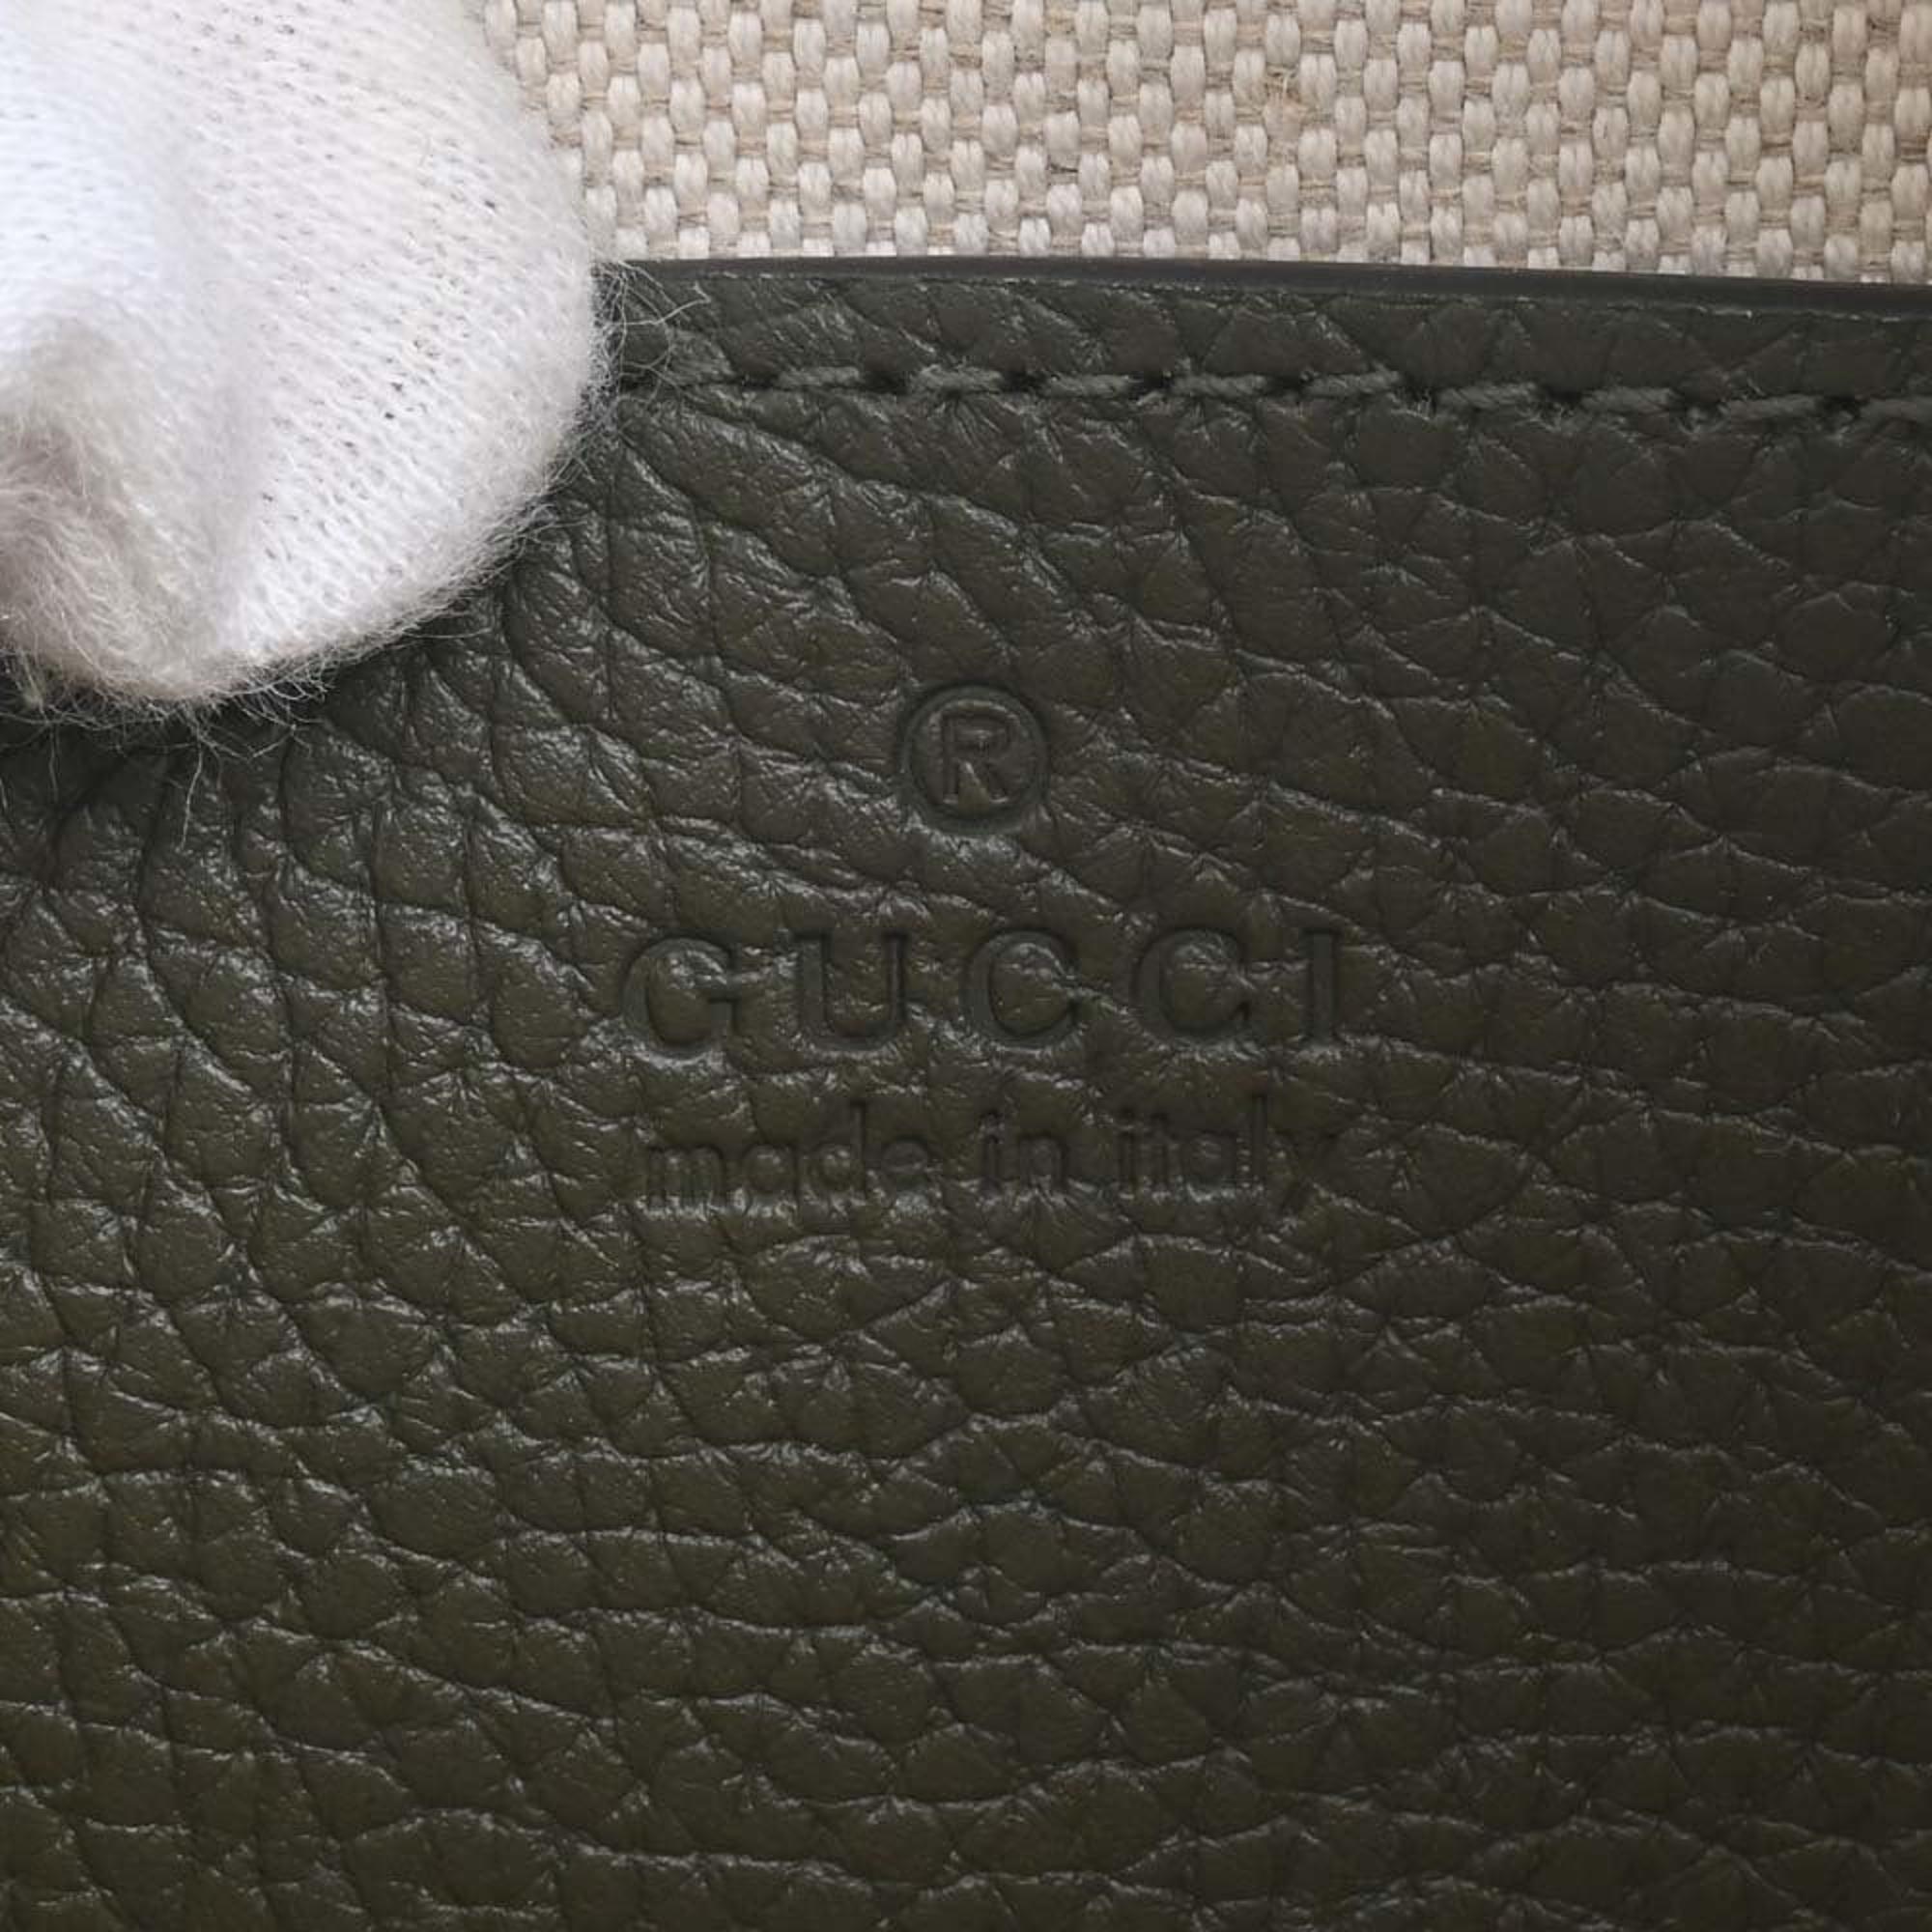 Gucci Black Jumbo GG Leather Mini Duffle Bag